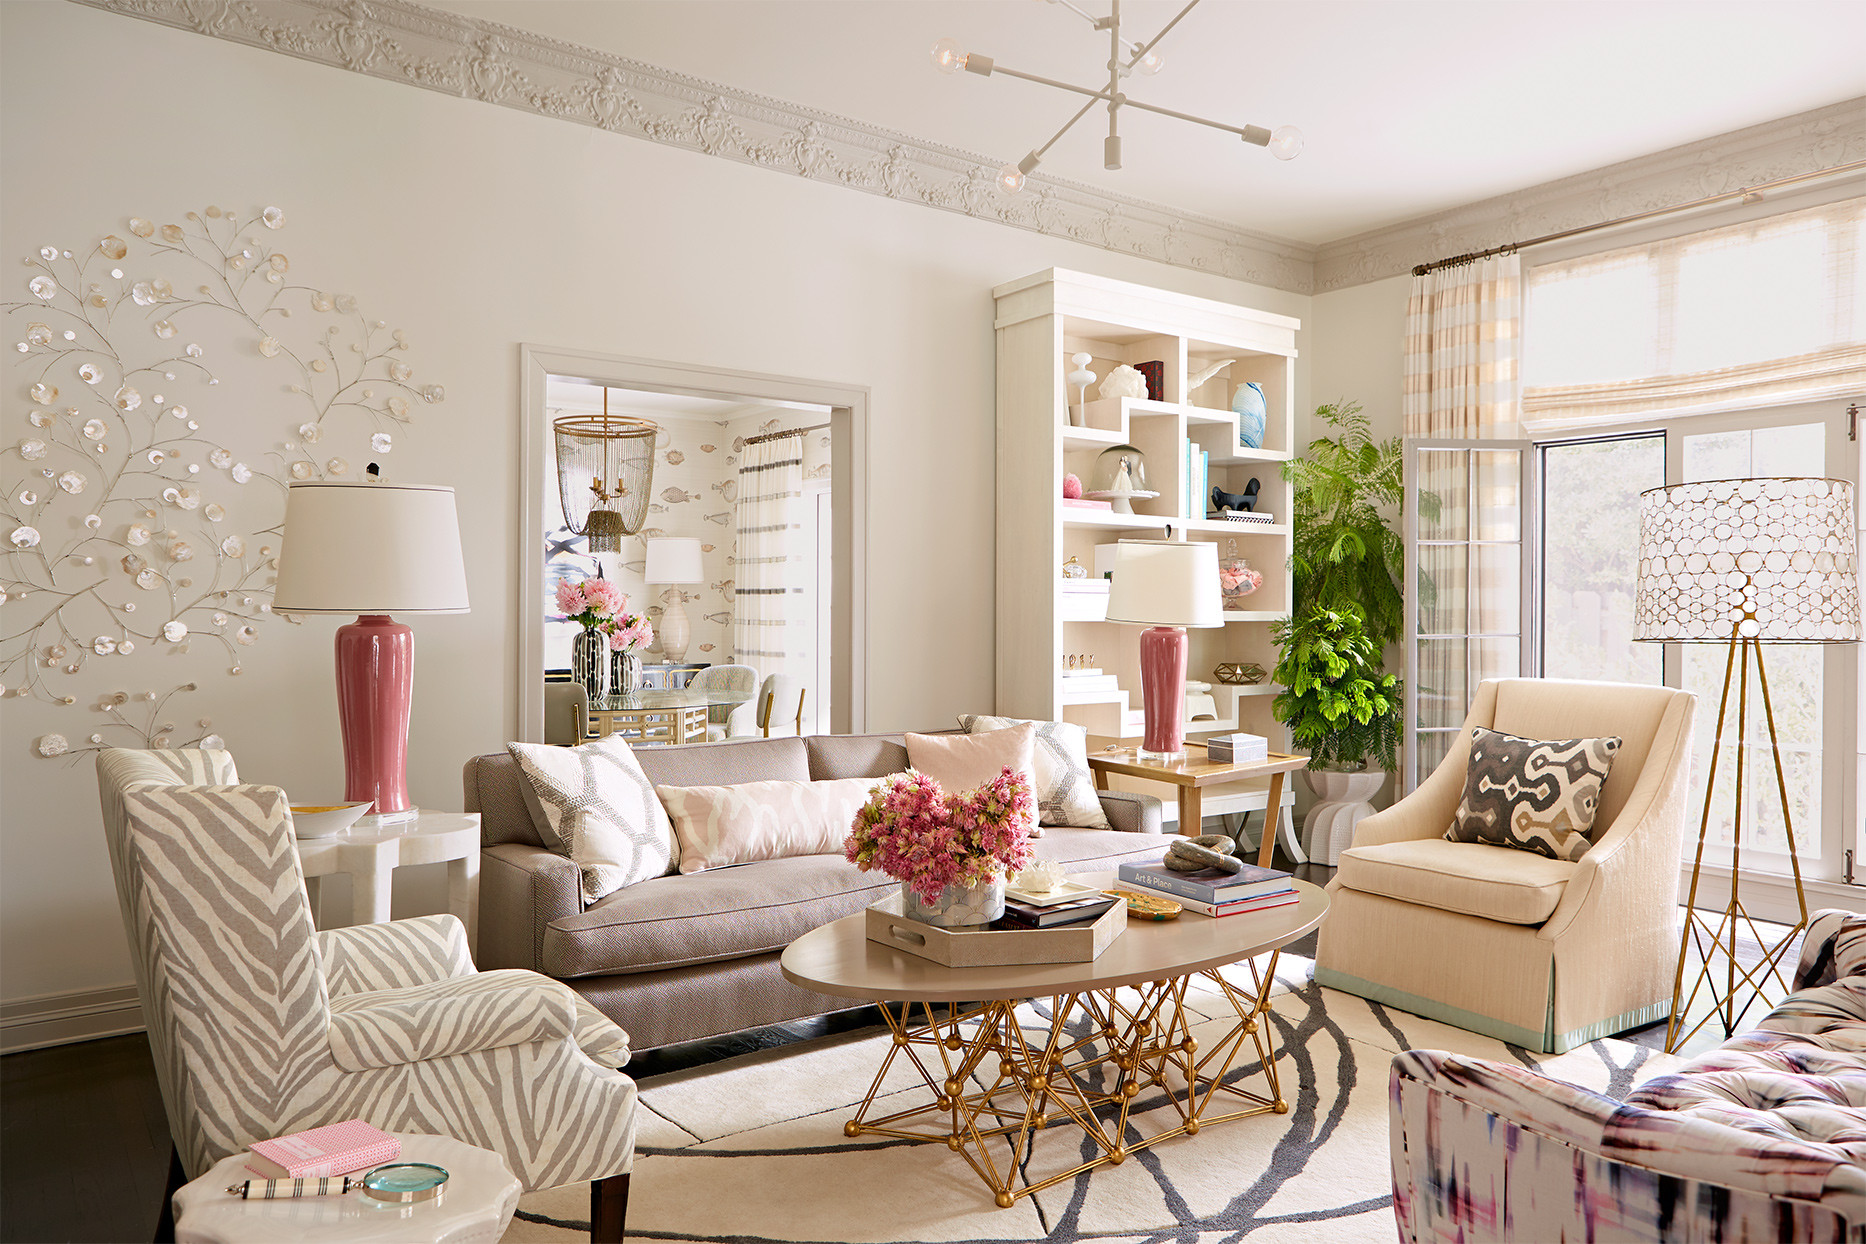 Color Palette For Living Room
 Our Best Neutral Living Room Color Ideas